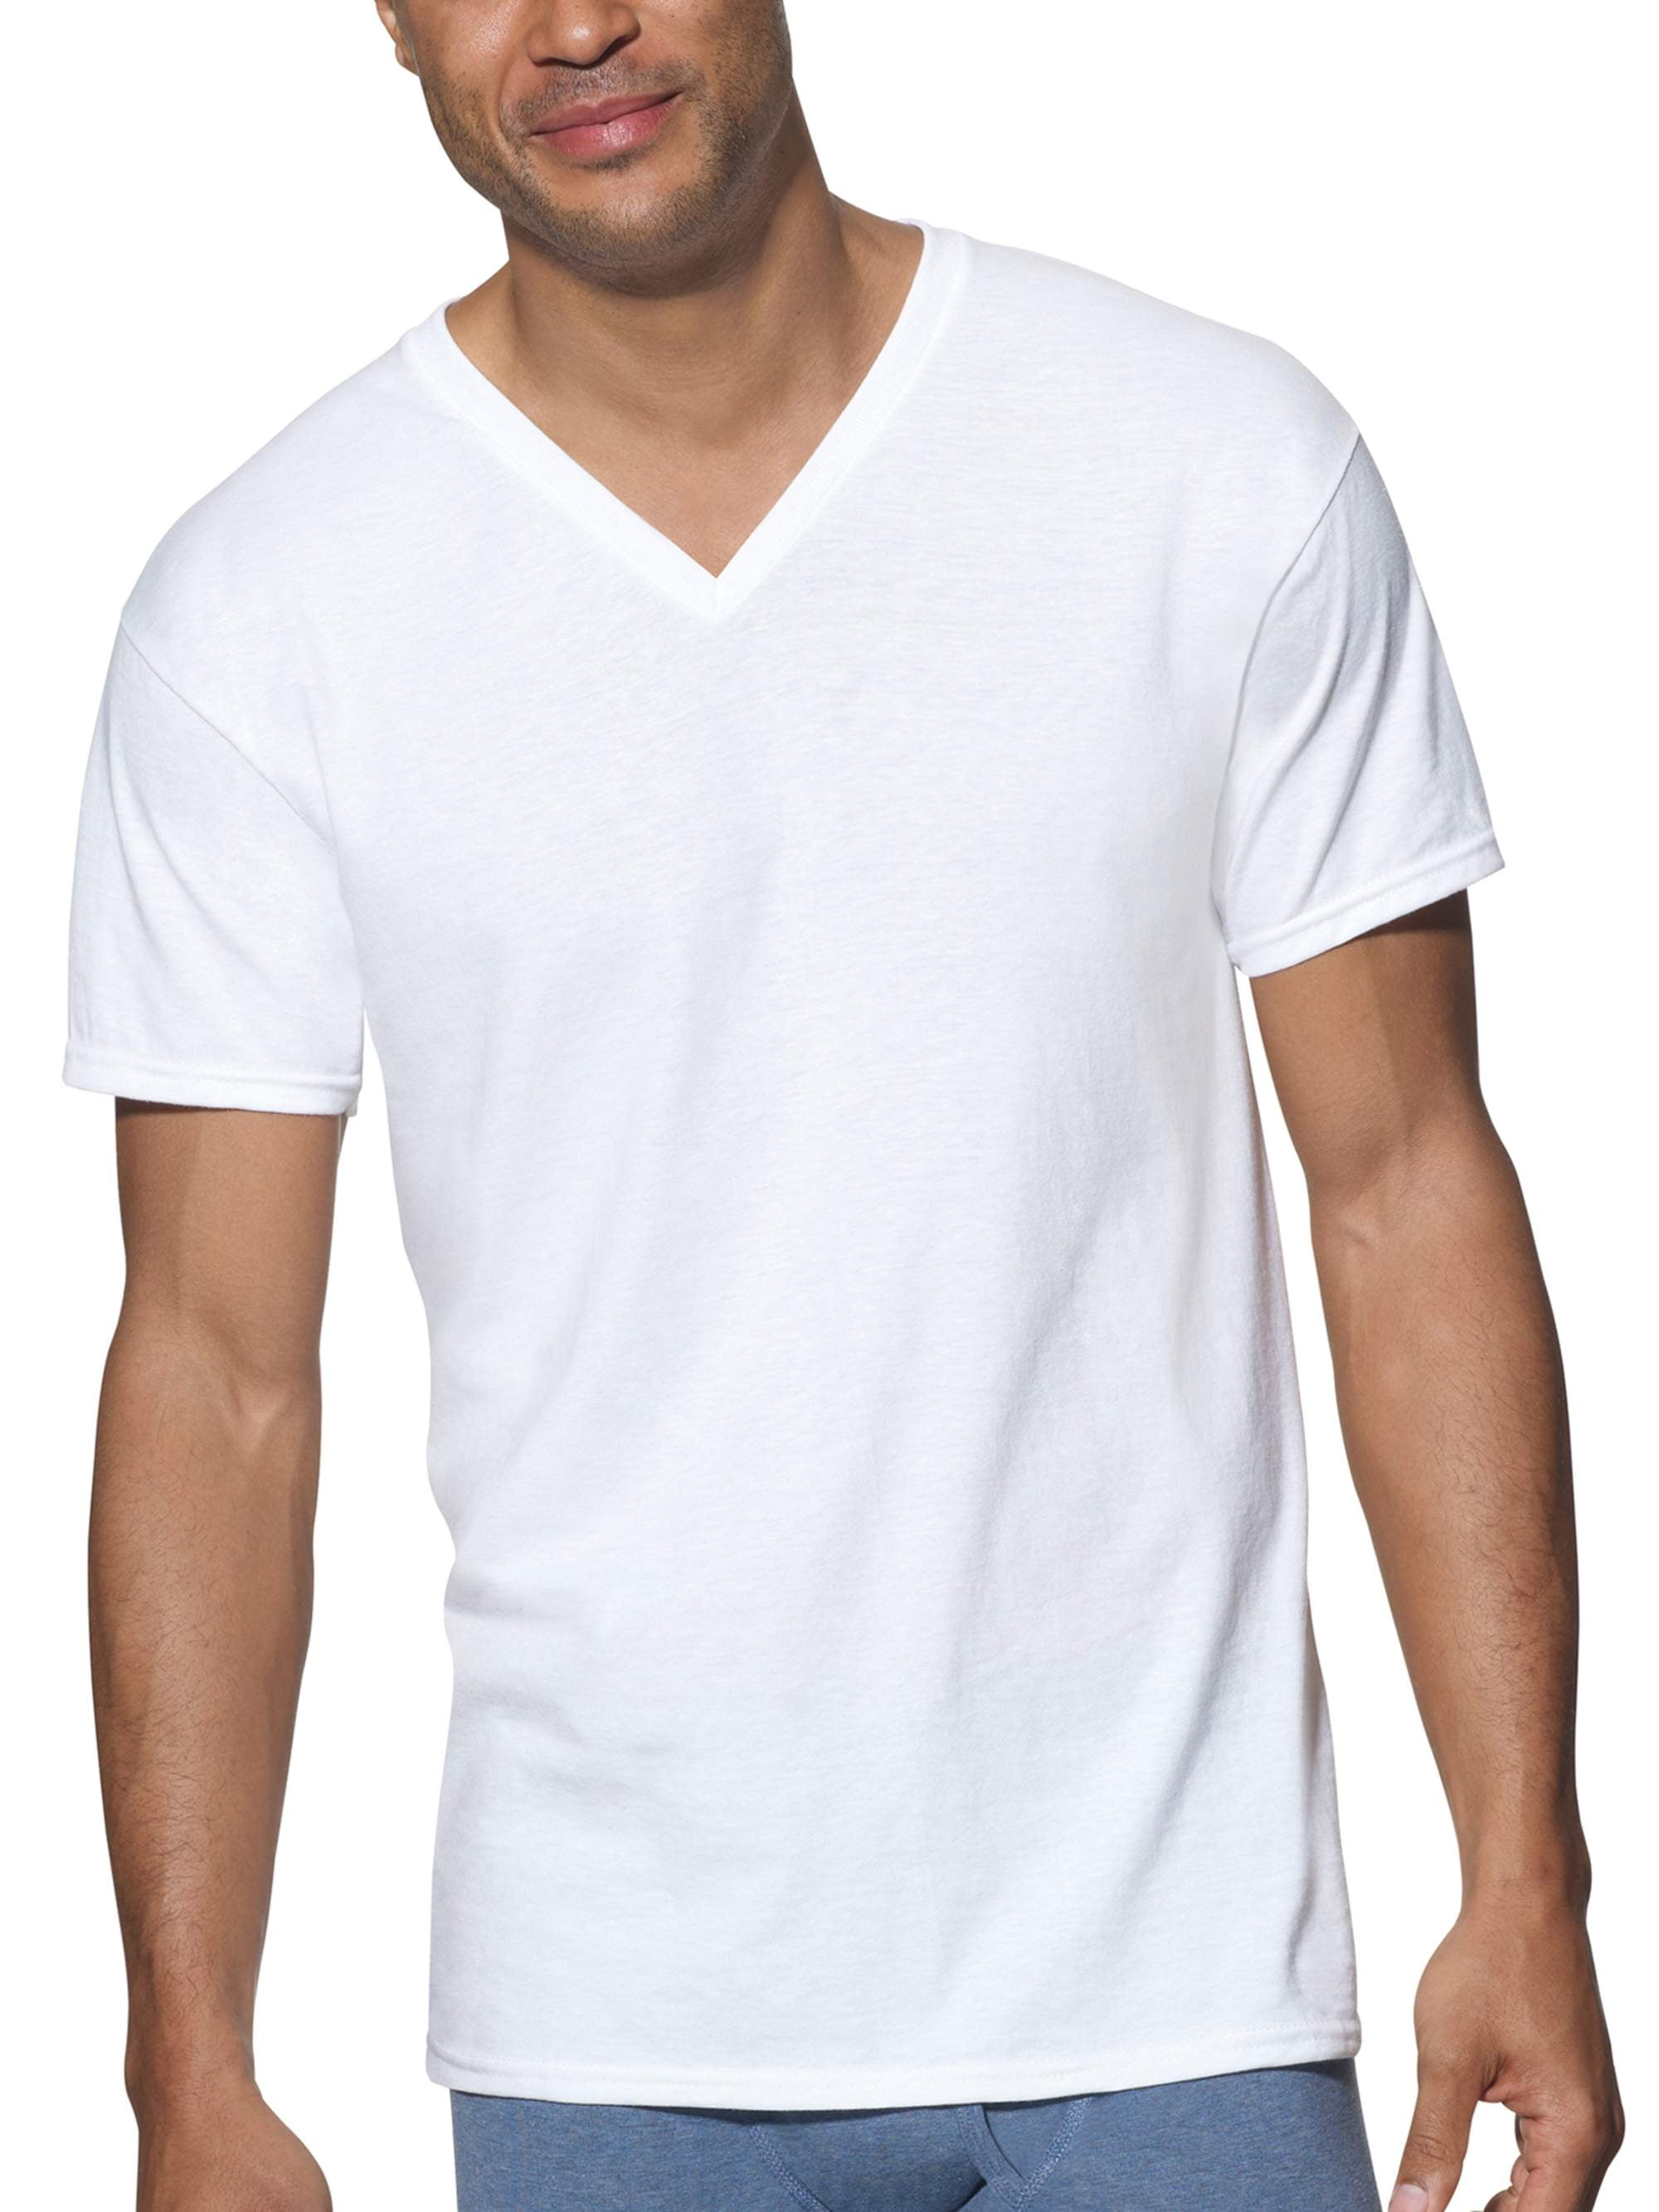 777 HANES Men's White V-Neck T-Shirts Undershirts 3 Pack